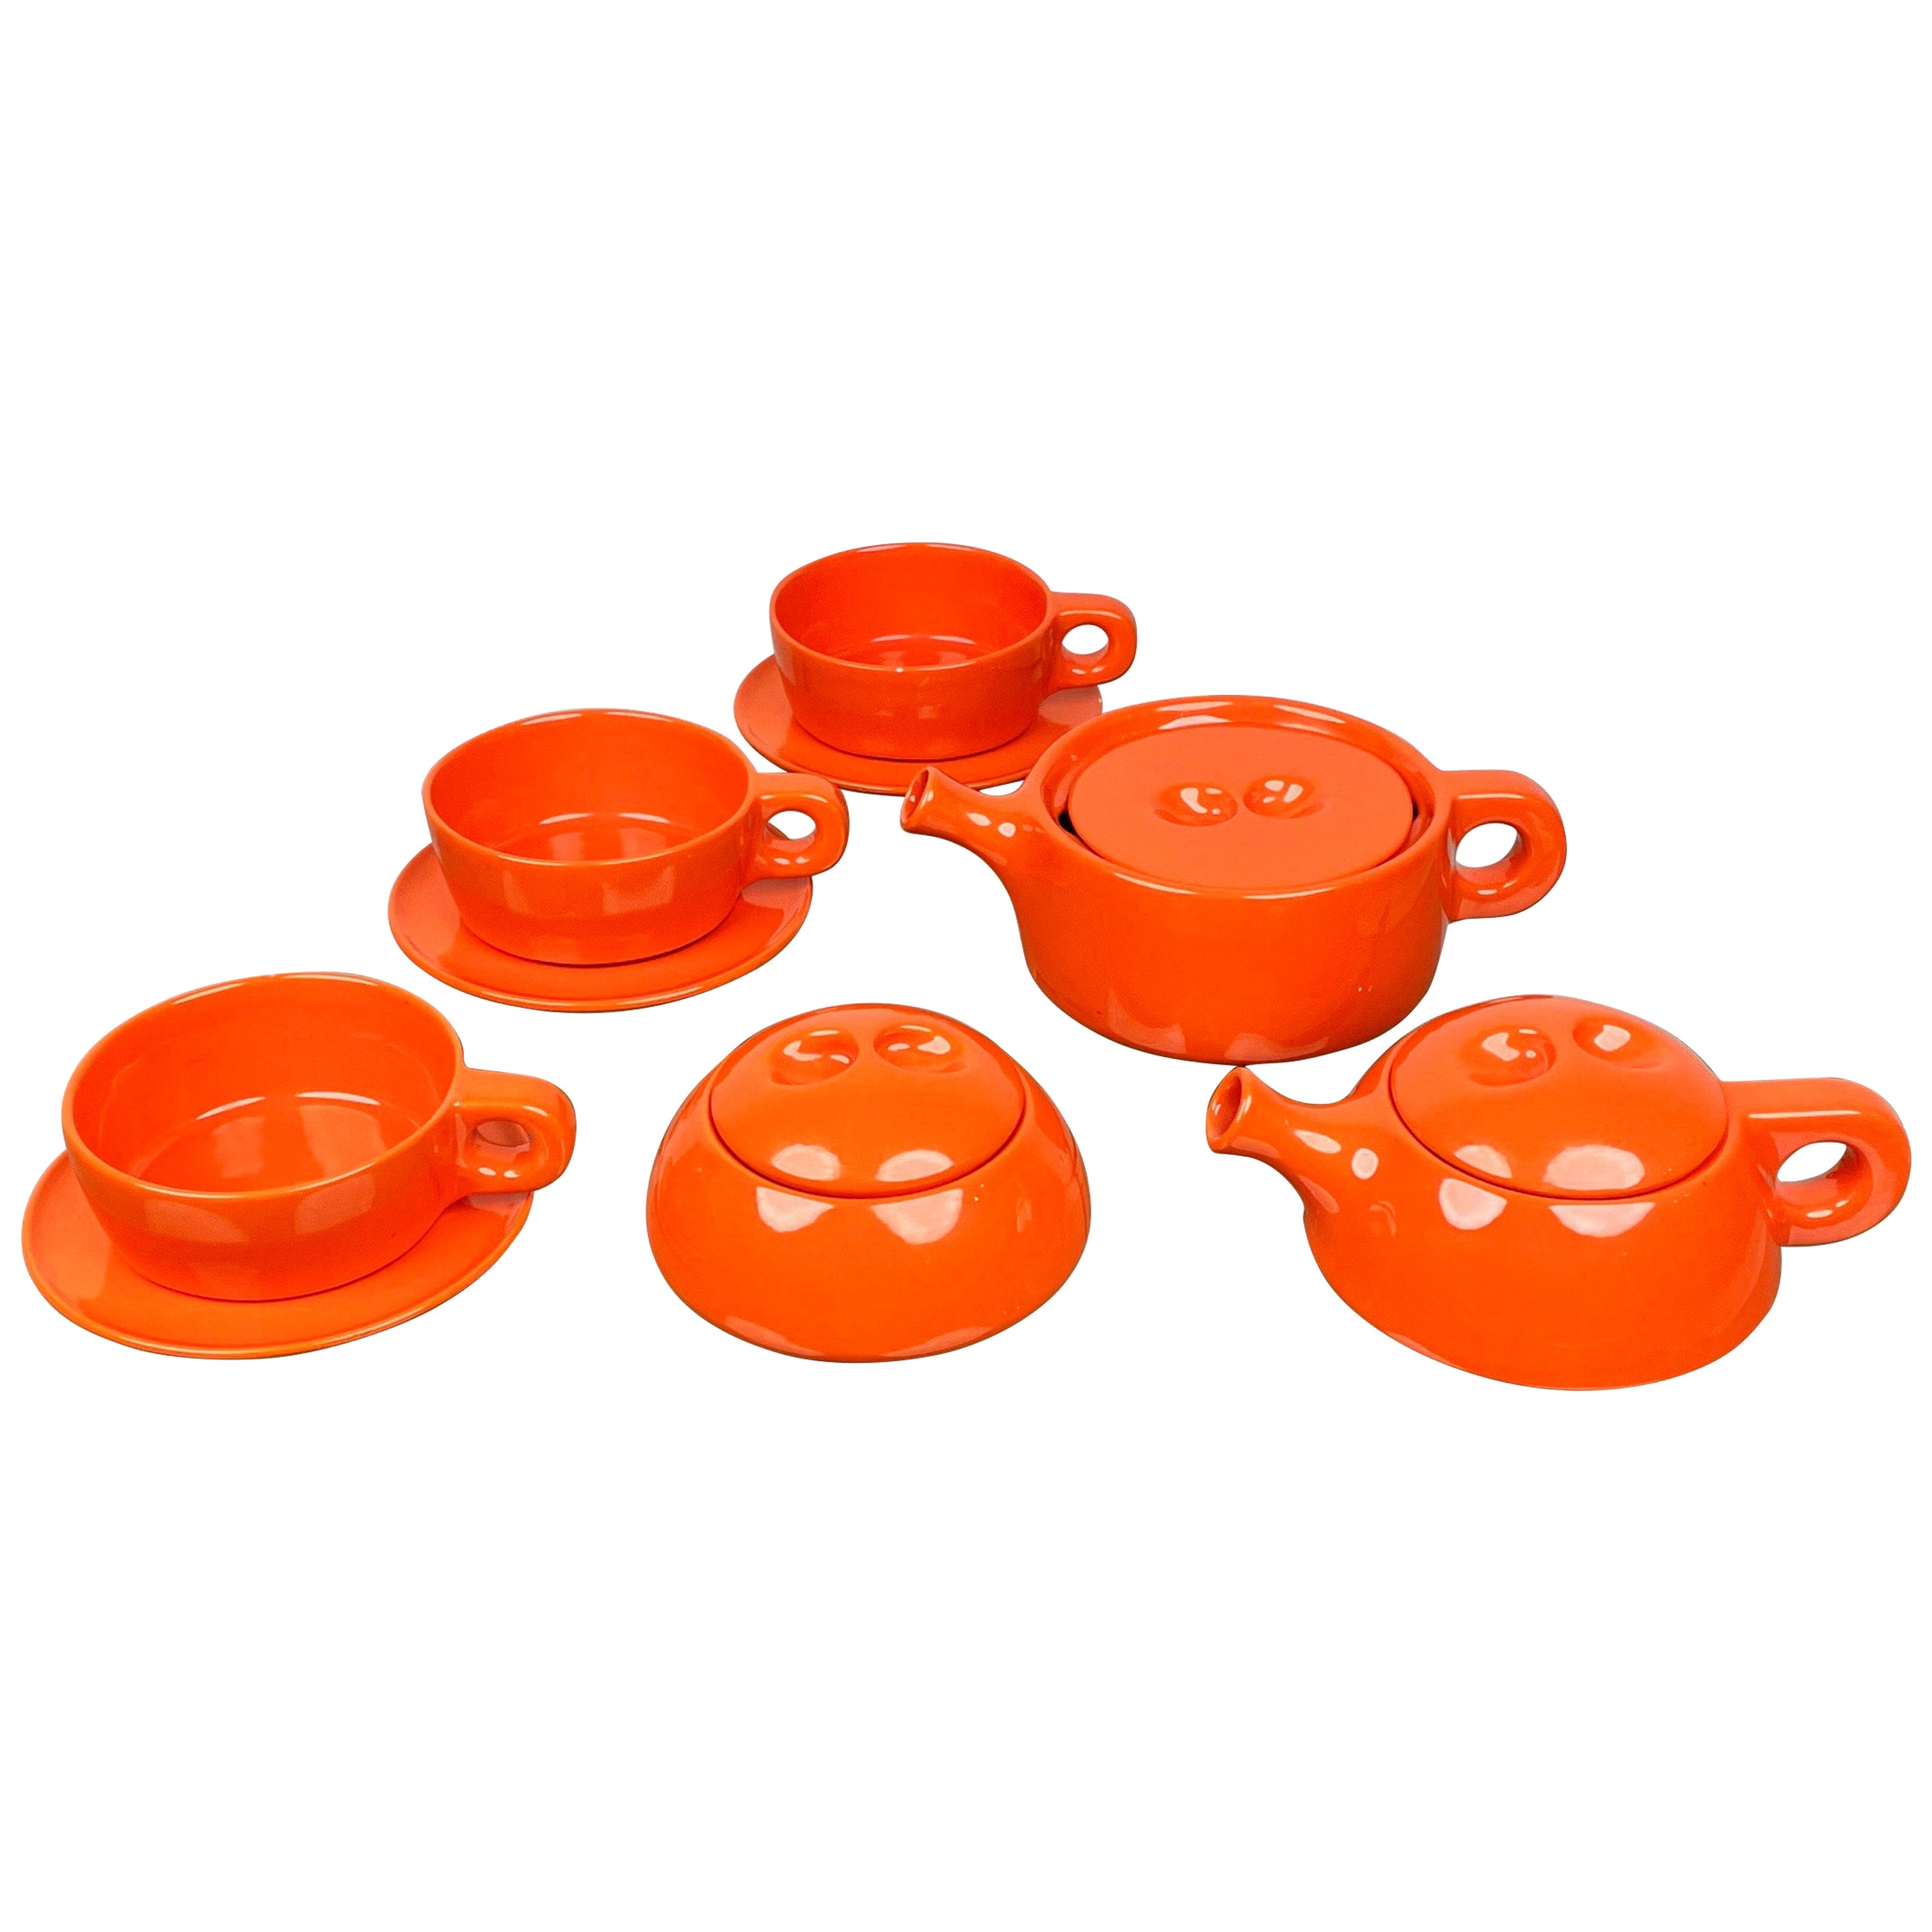 Tea Set in Orange Ceramic by Liisi Beckmann for Gabbianelli, Italy, 1960s For Sale